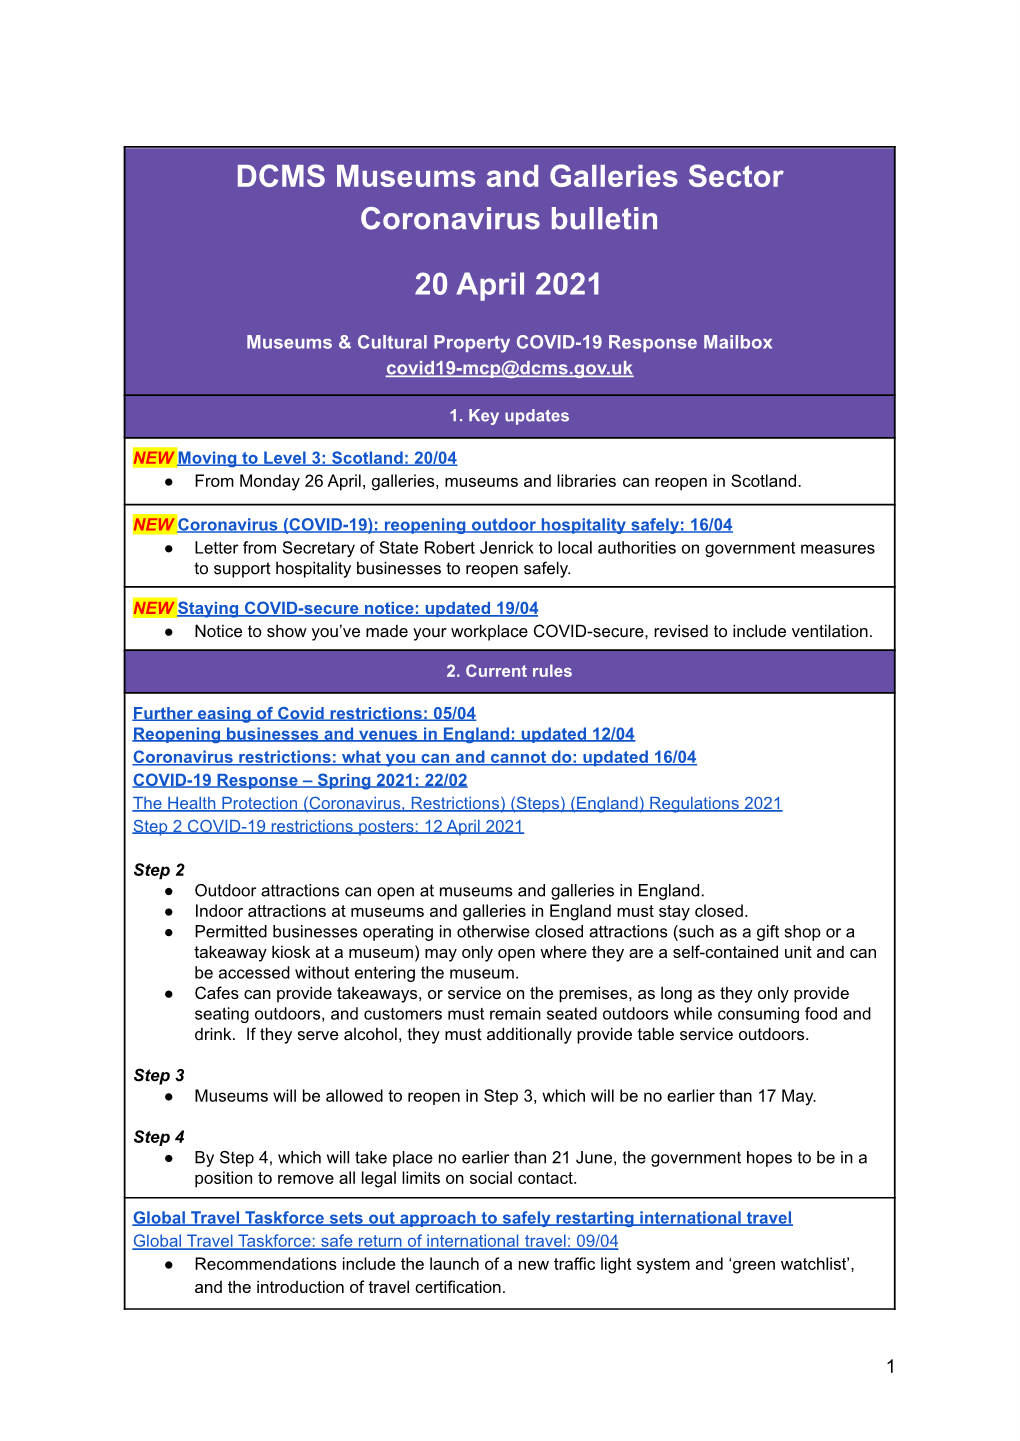 DCMS Museums and Galleries Sector Coronavirus Bulletin 20 April 2021